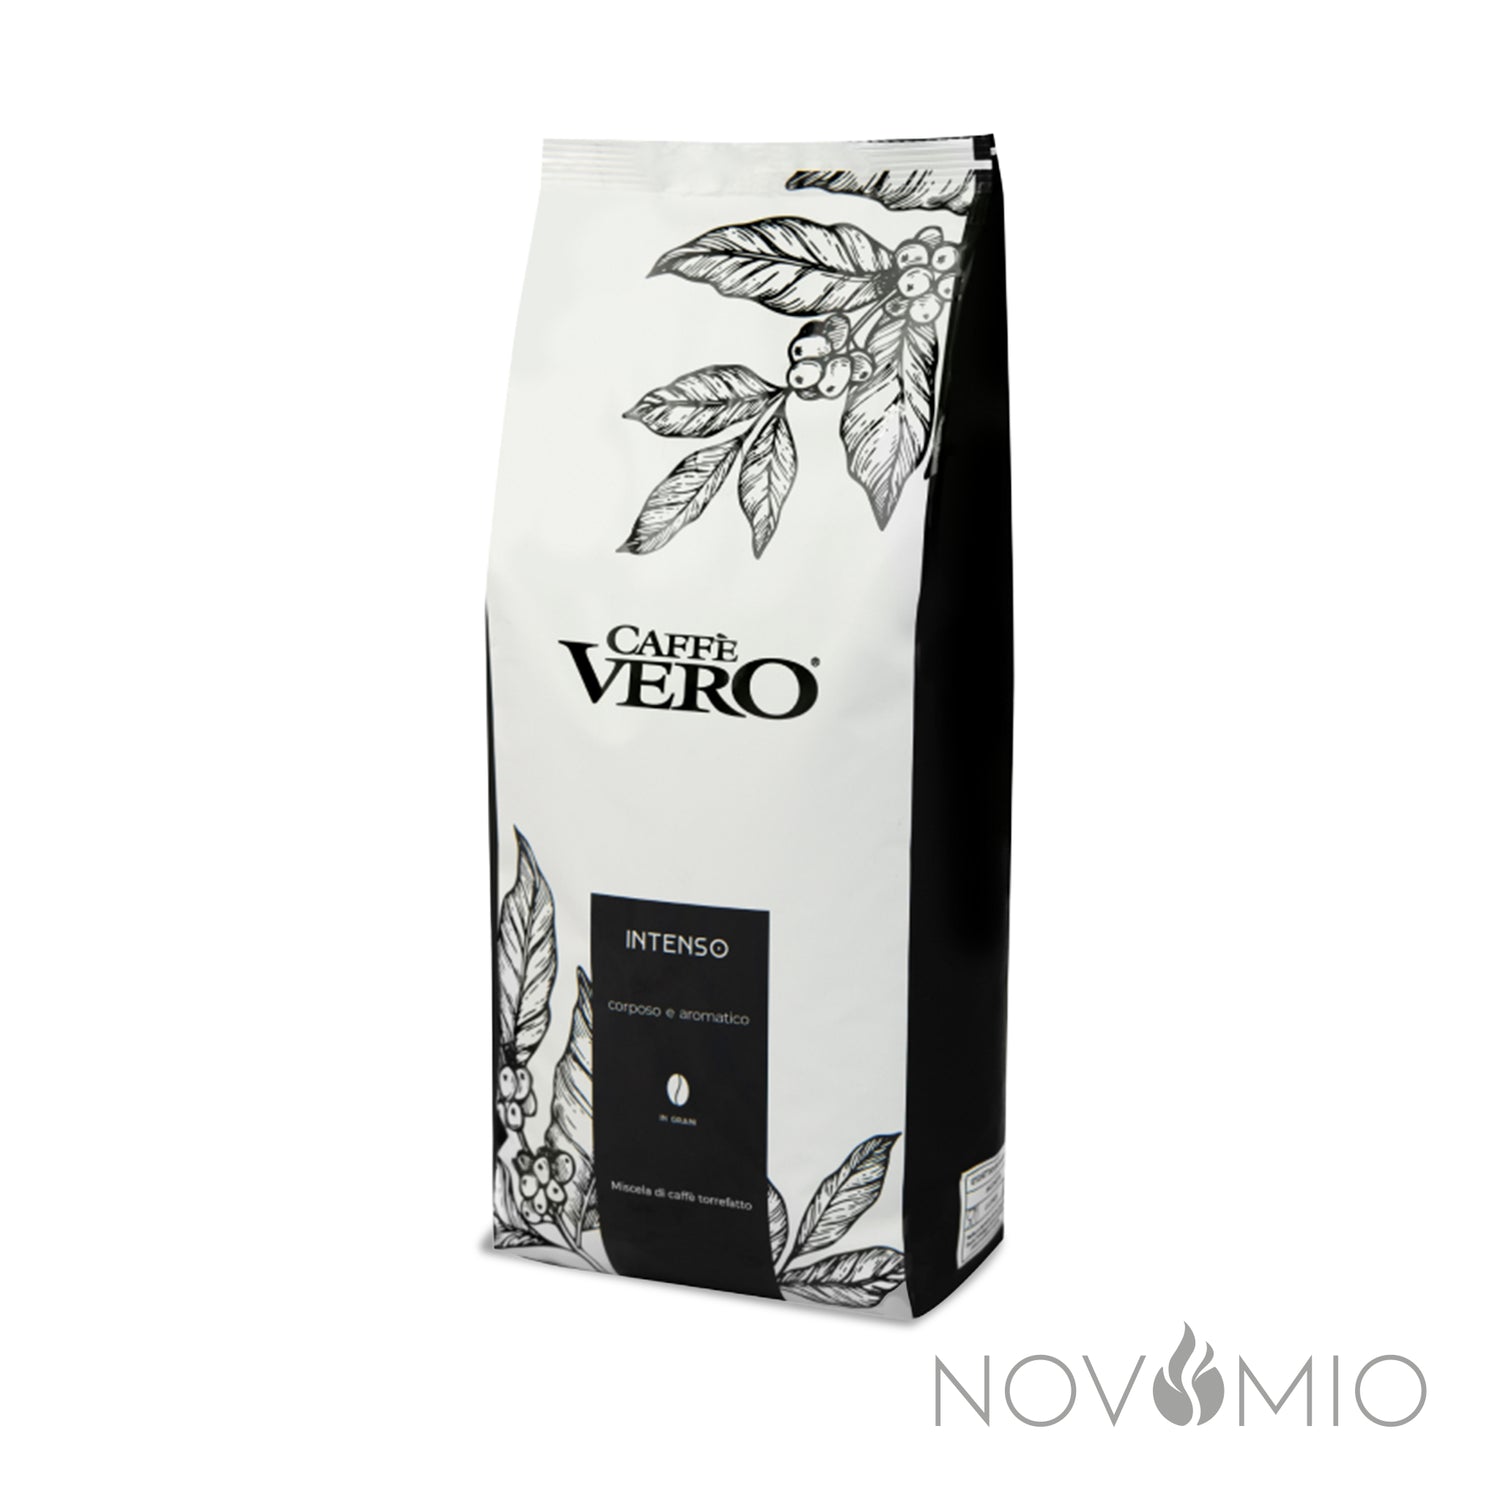 Caffe Vero - Intenso 1 KG